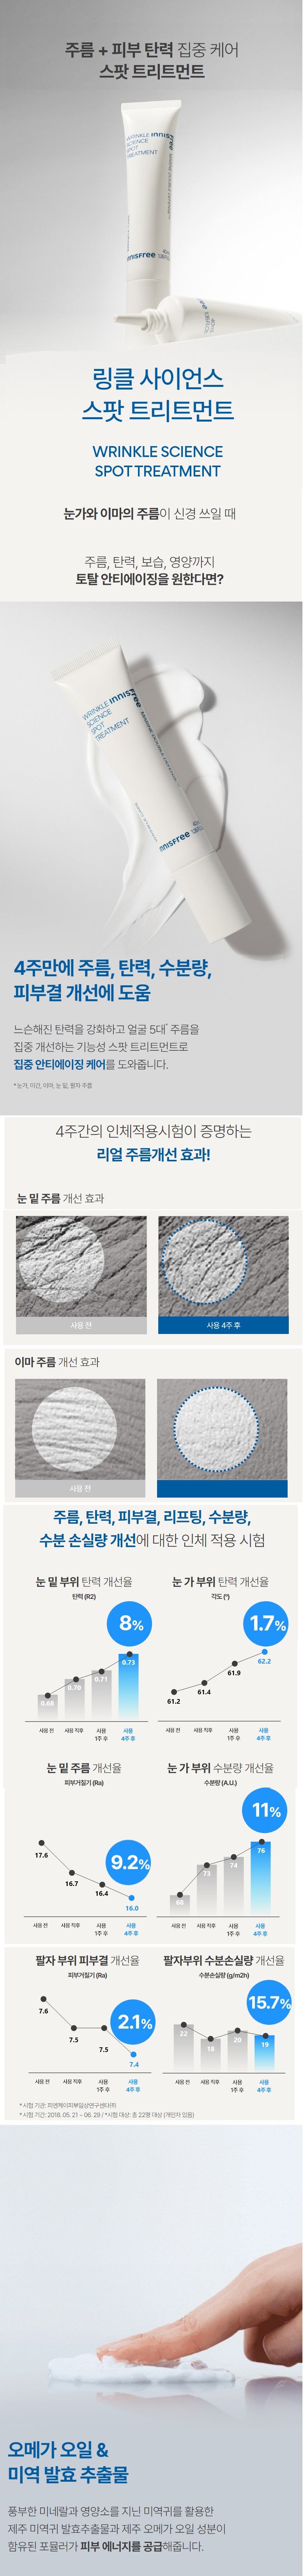 Innisfree Wrinkle Science Spot Treatment korean skincare product online shop malaysia china poland1